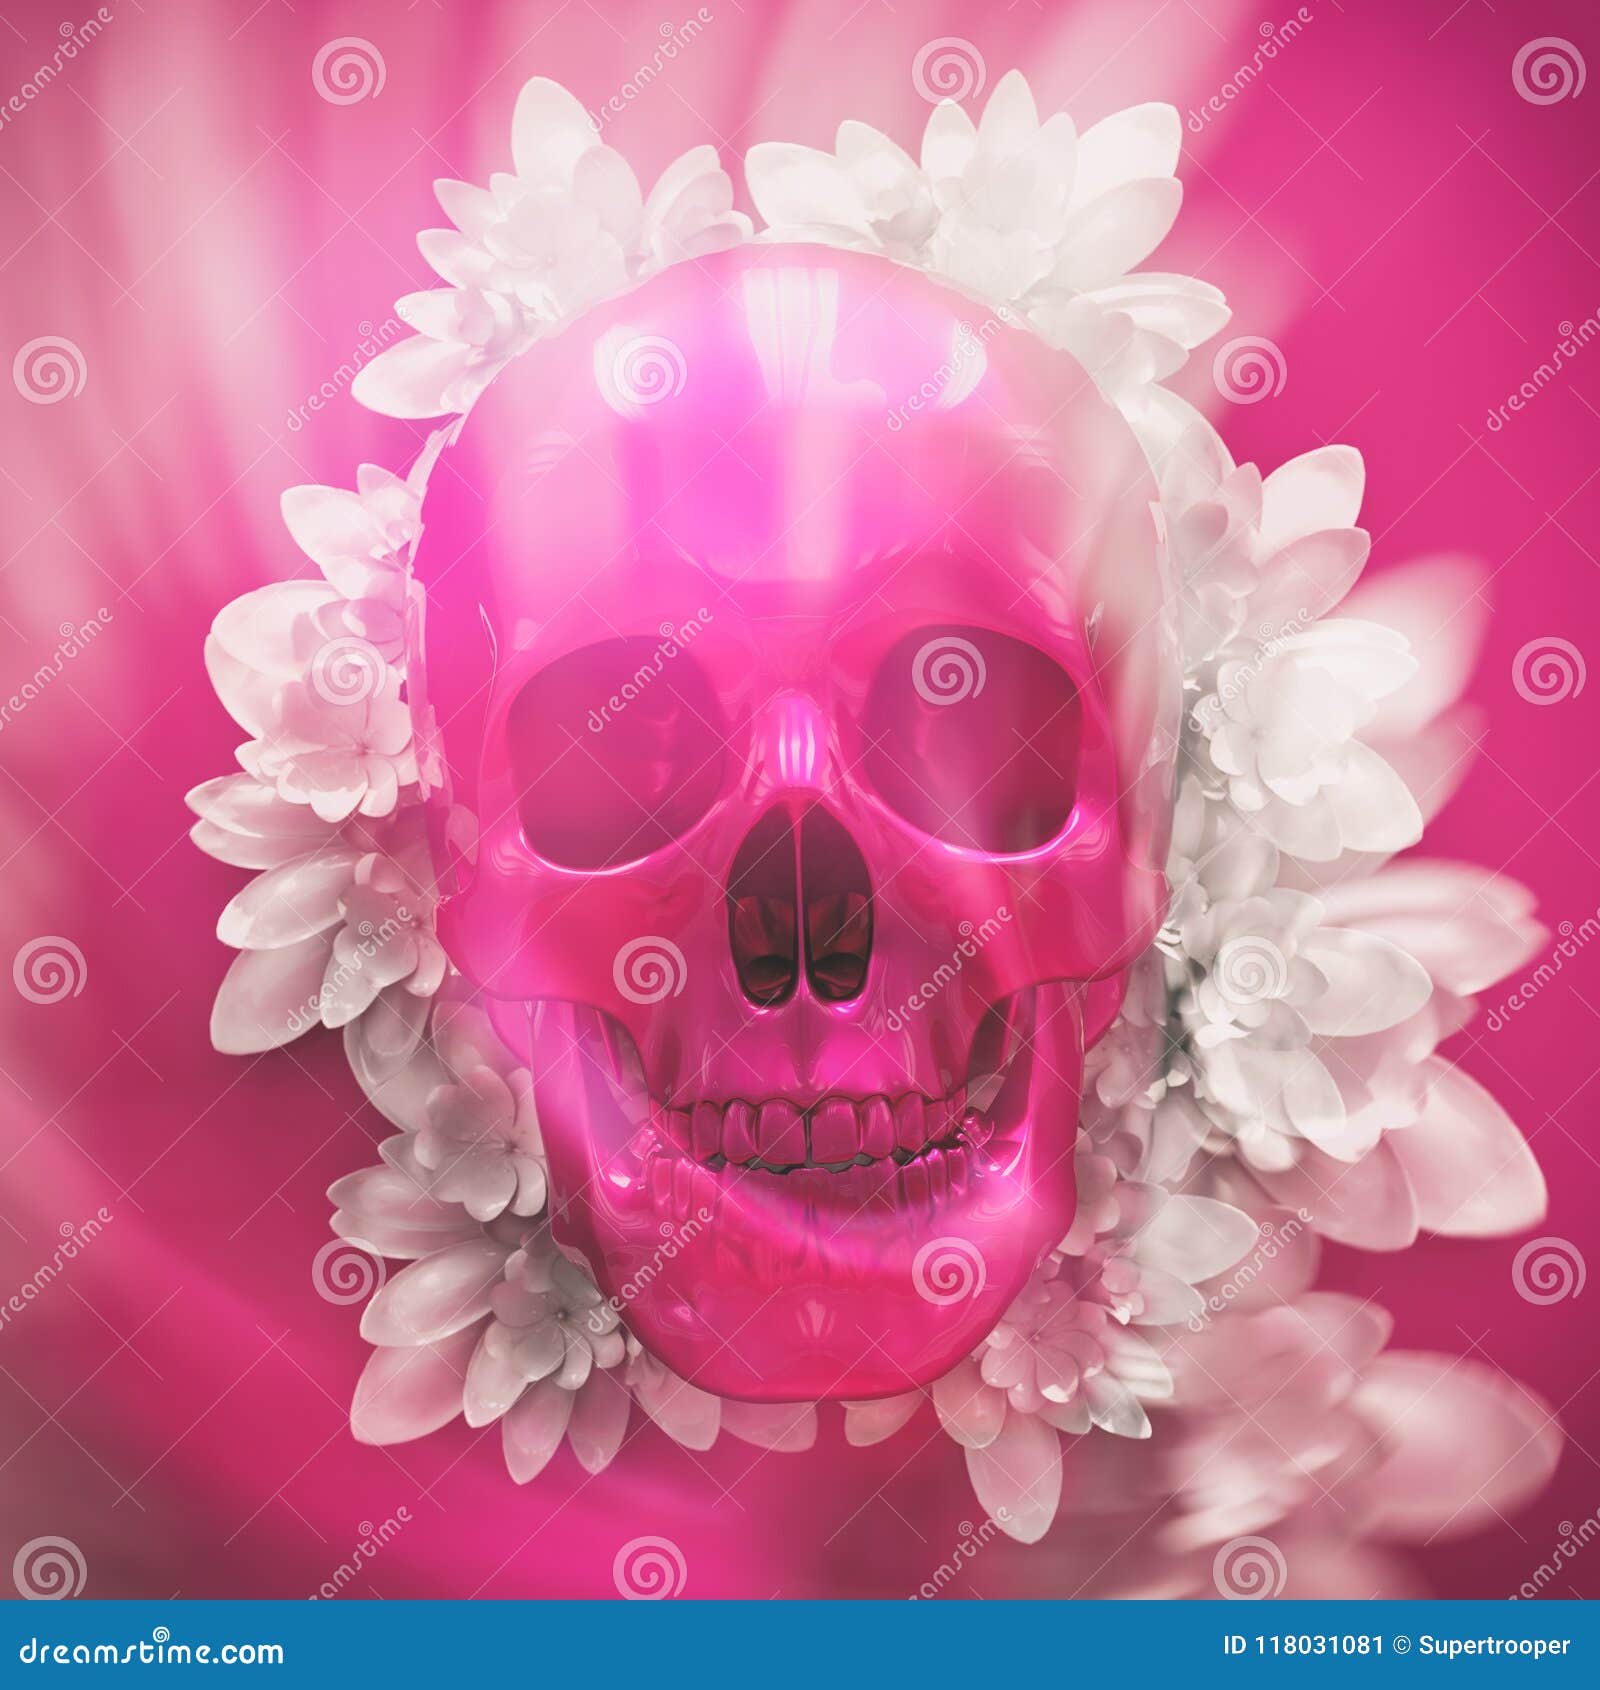 Human Skull Art Image stock illustration. Illustration of pattern ...